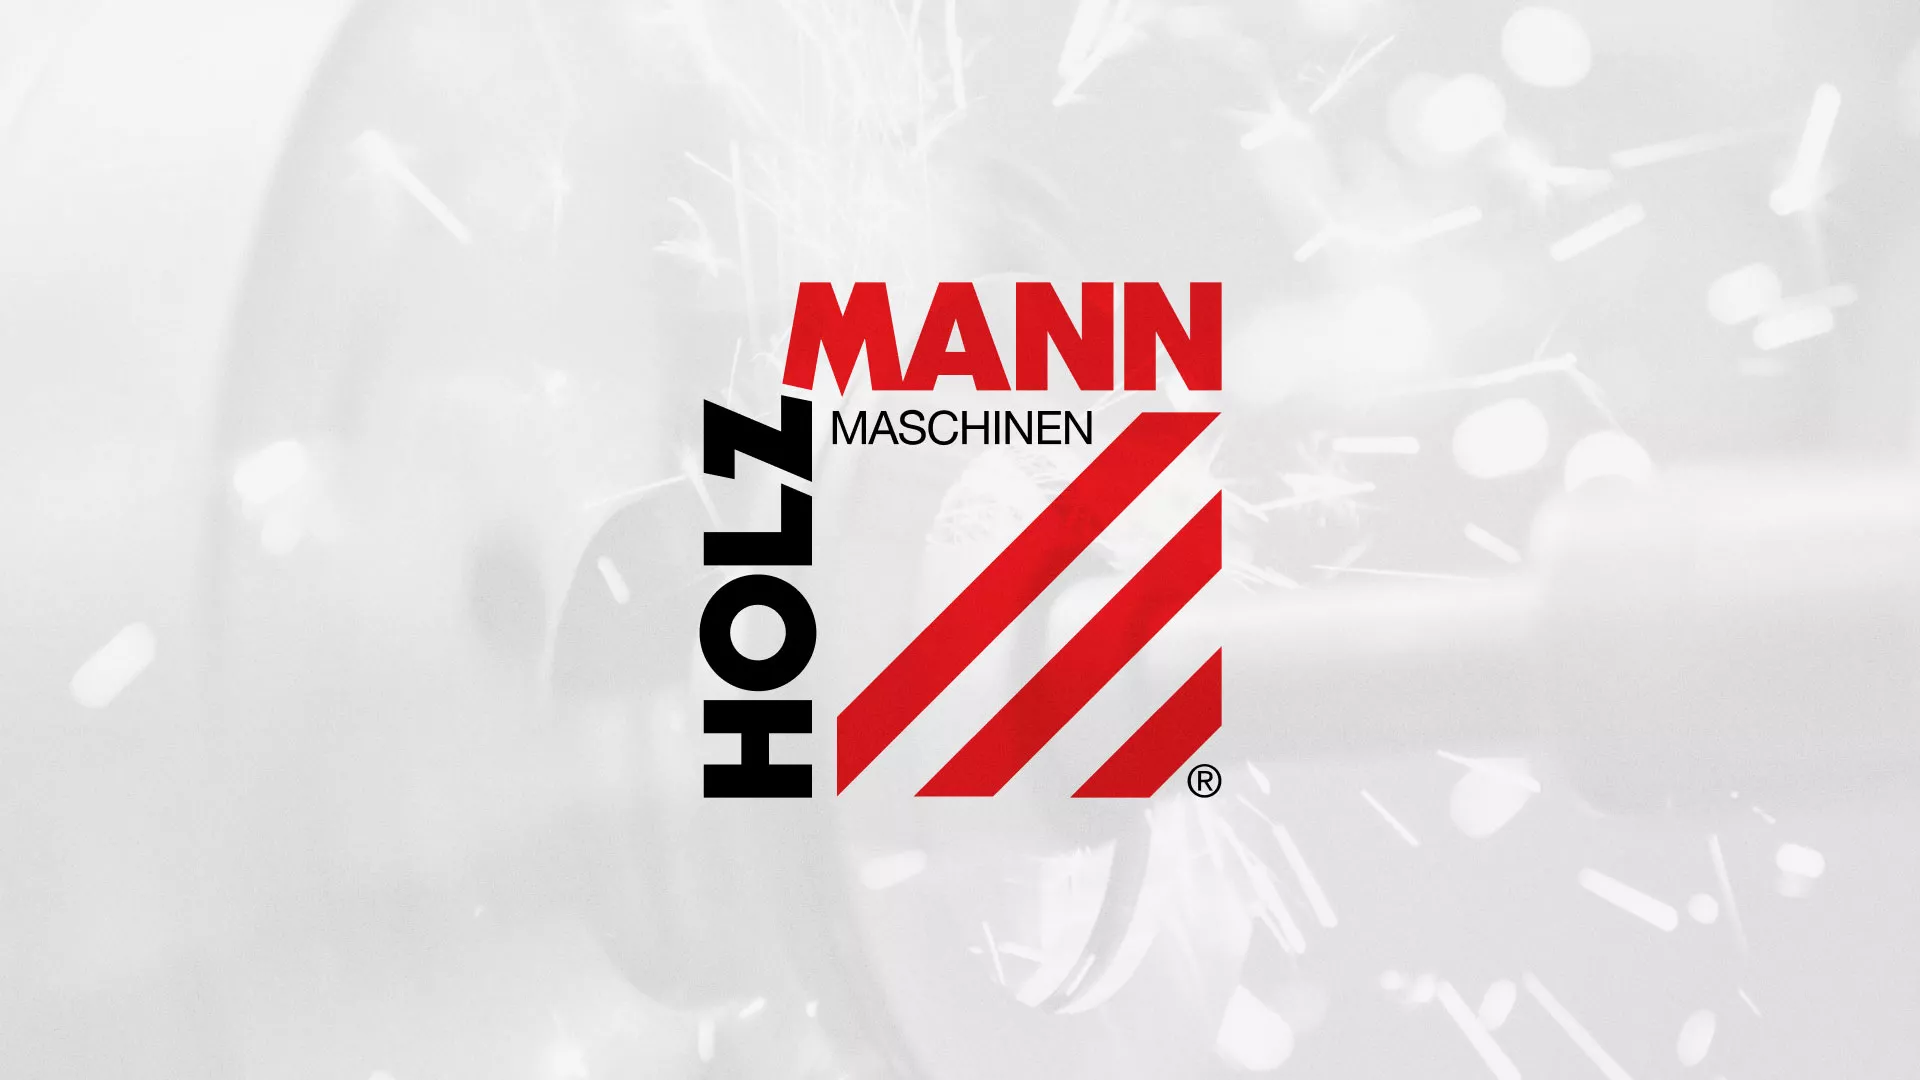 Создание сайта компании «HOLZMANN Maschinen GmbH» в Бакале